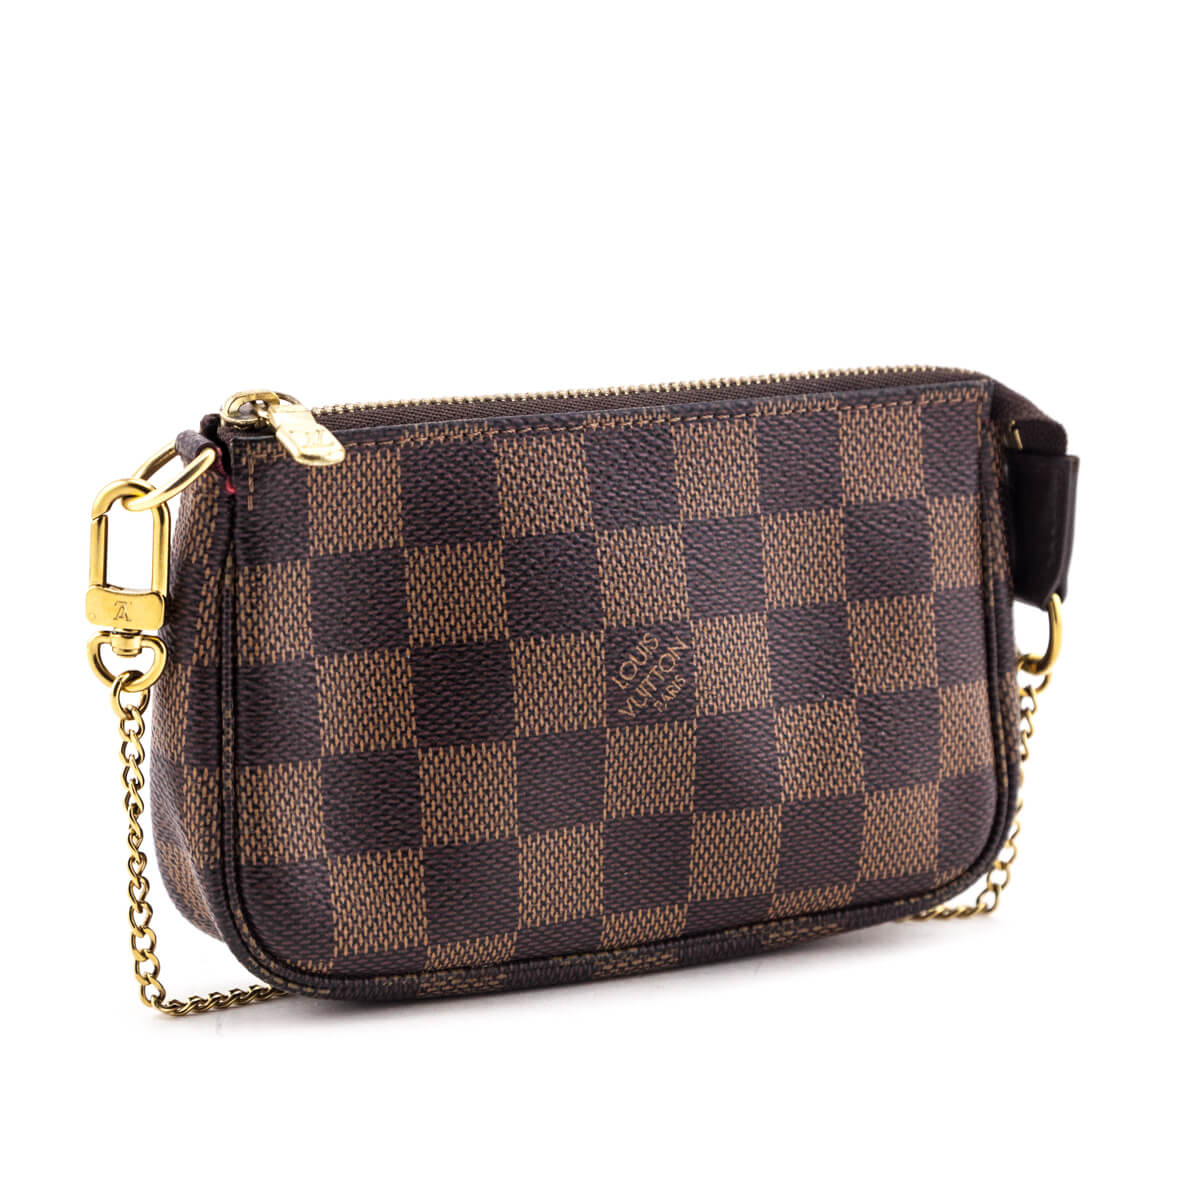 Secondhandbags | Nr.1 Shop for Secondhand Designer Handbags |  Secondhandbags AG